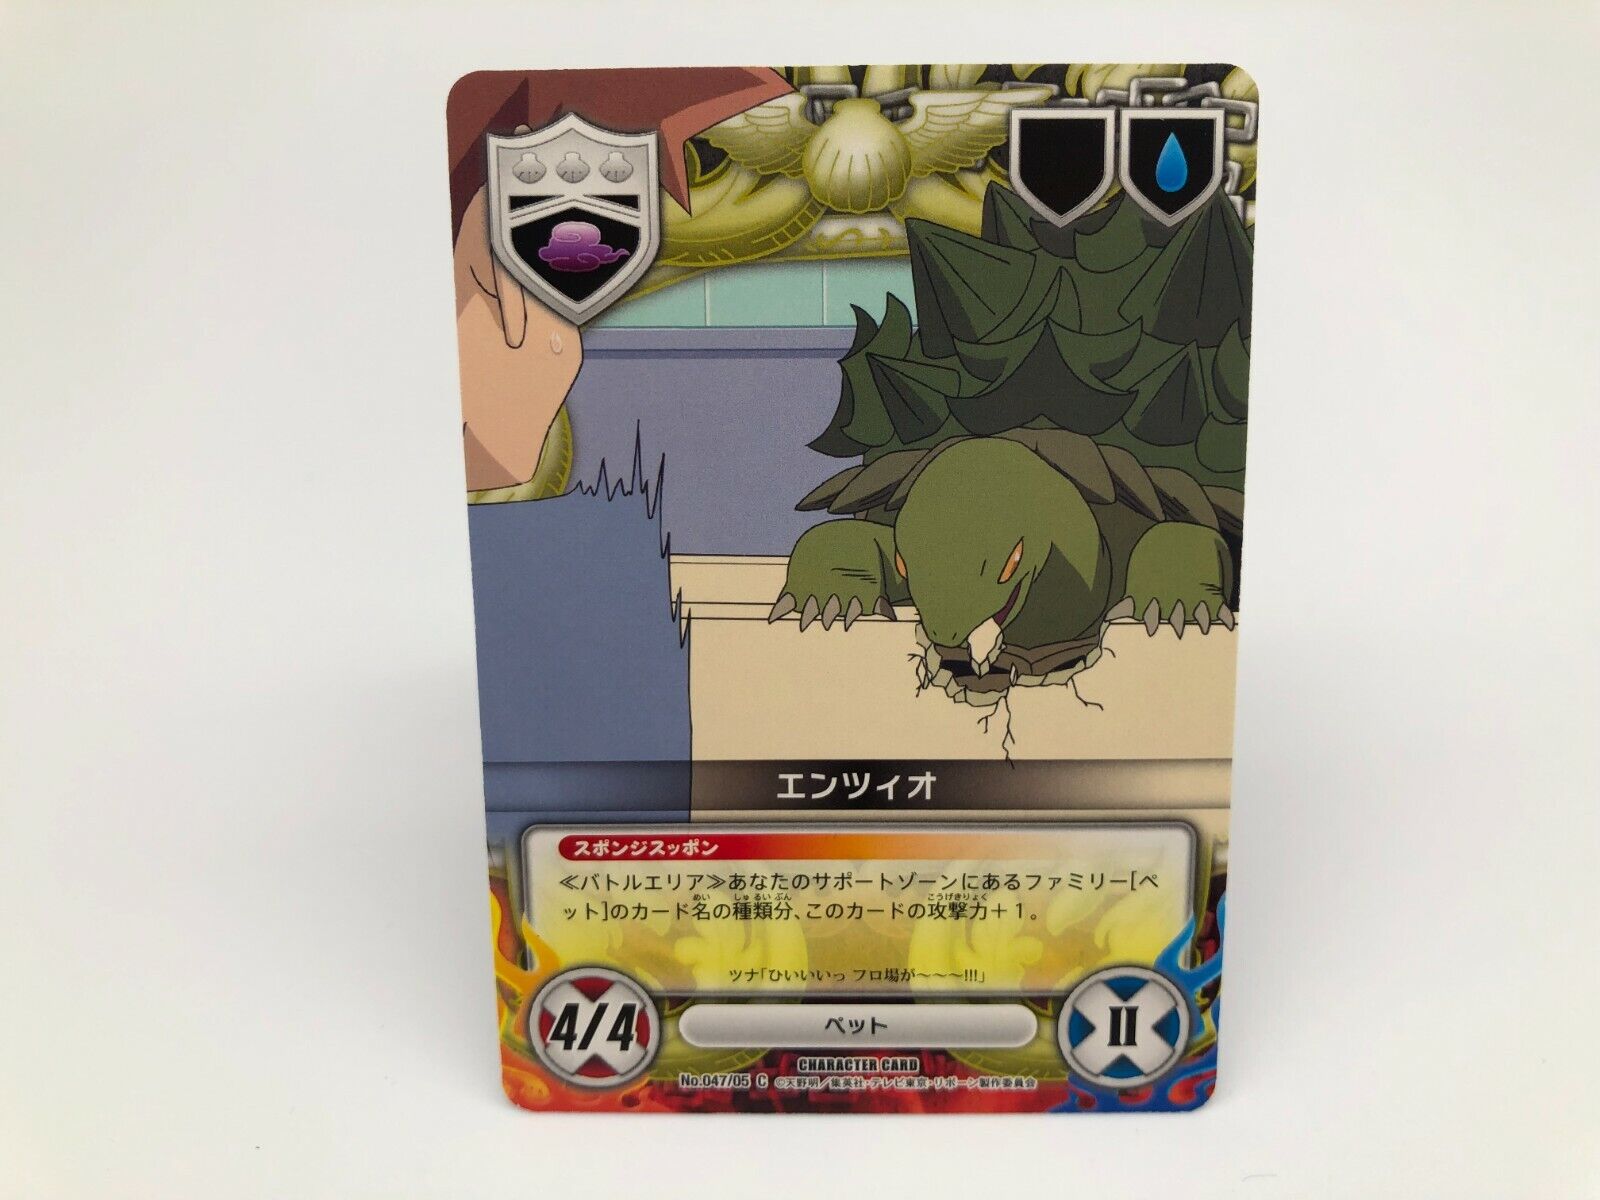 Katekyo Hitman Reborn  card Japanese BROCCOLI Rare F/S